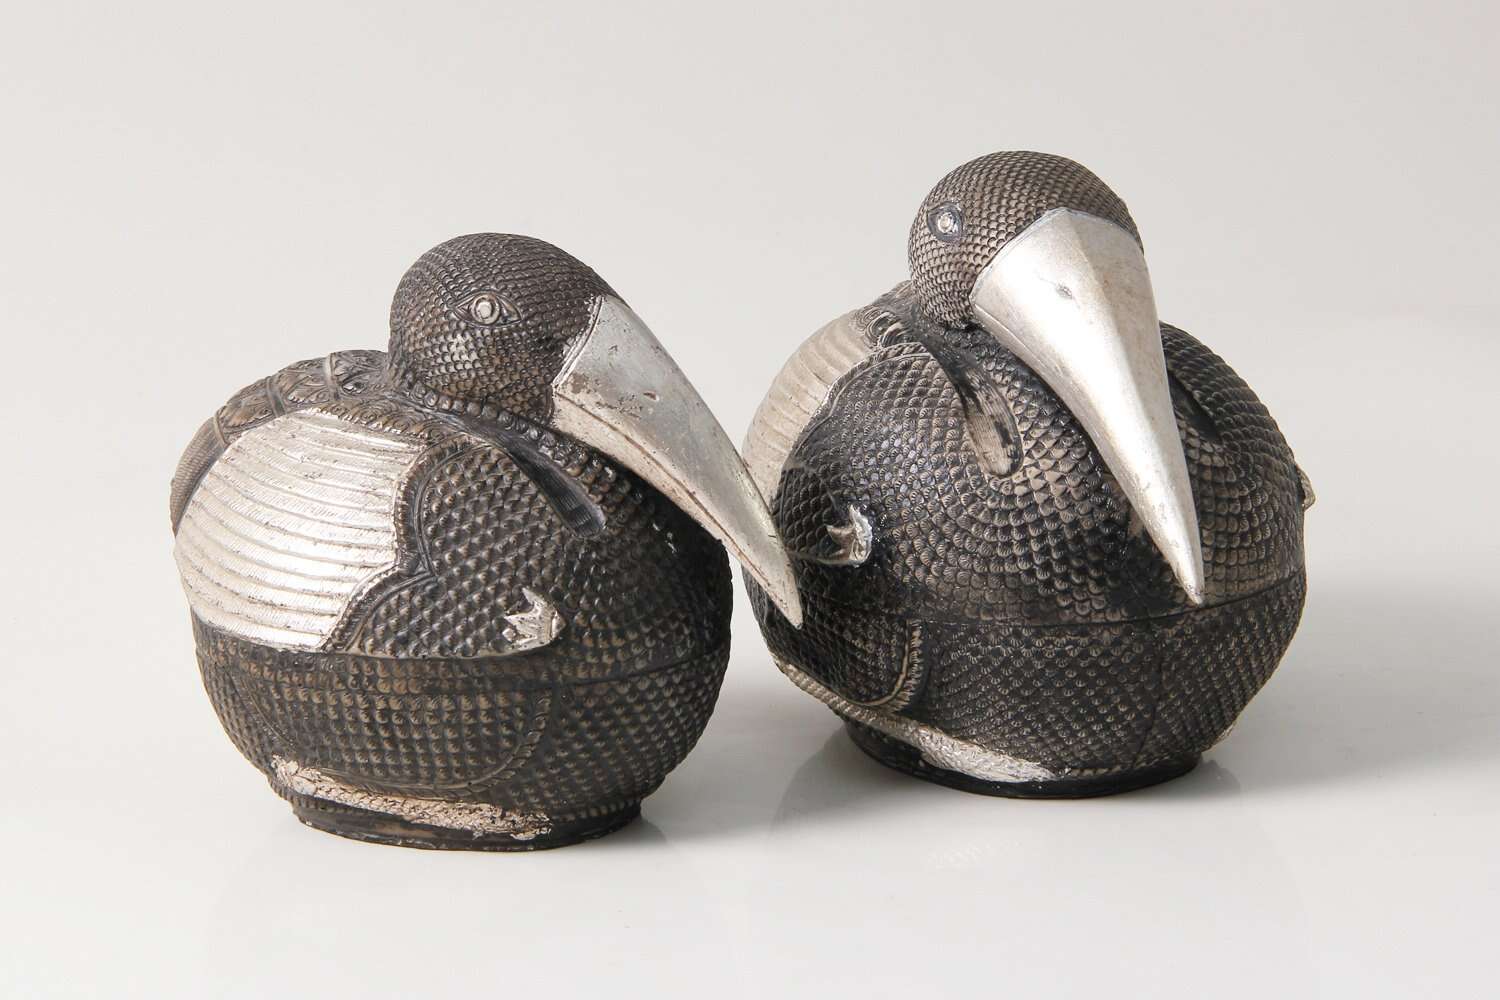 Pair of silver bird sculptures for interior decorators